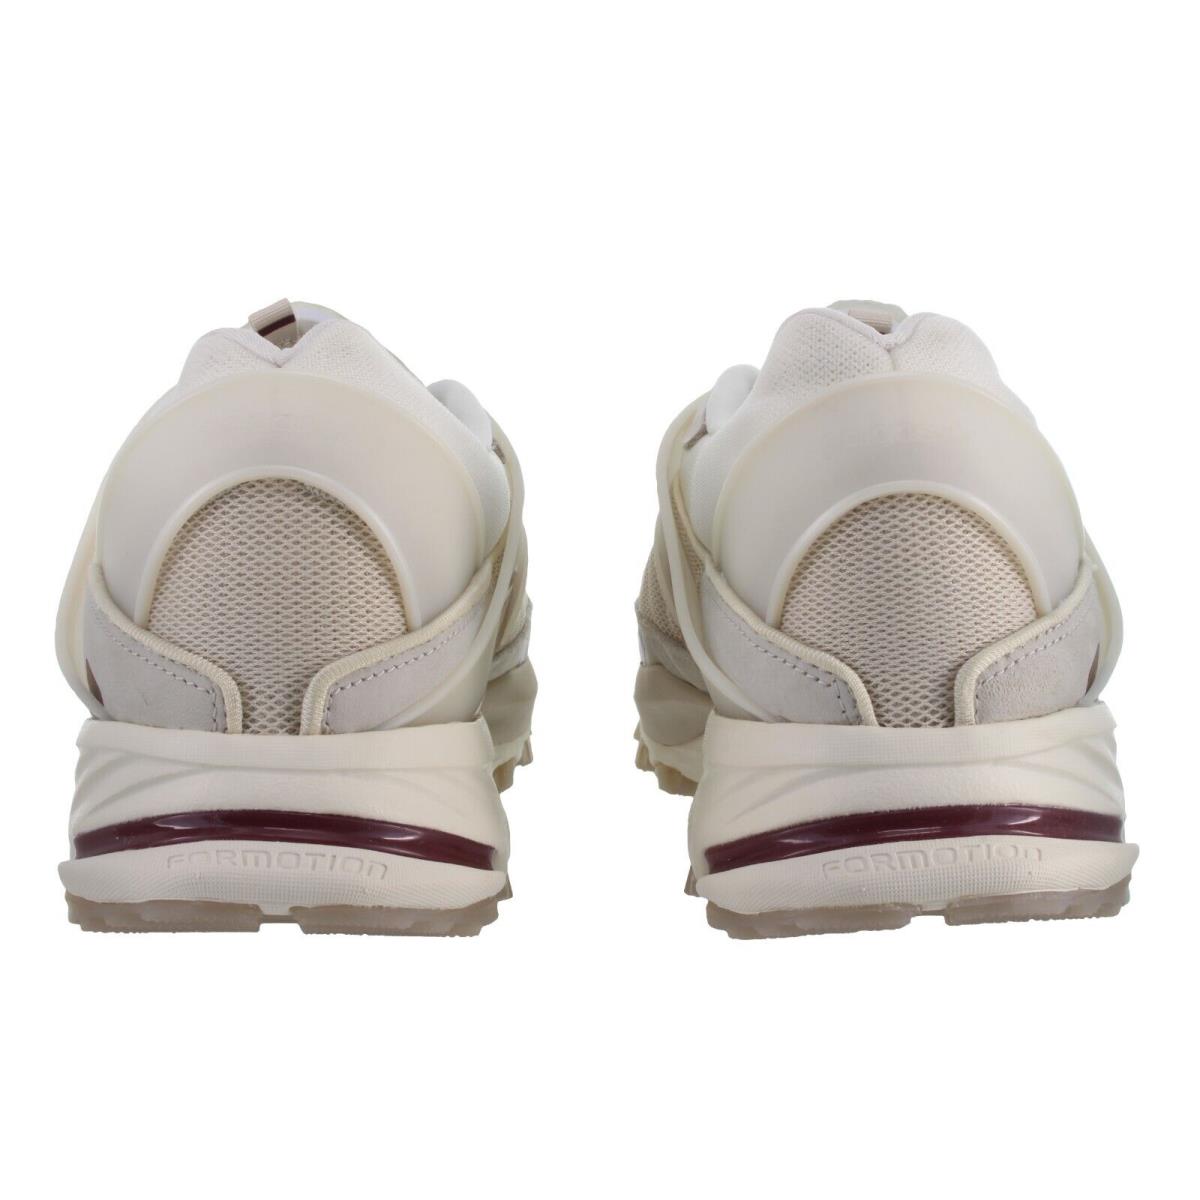 Adidas shoes  - Off White, Tan, Supplier Colour 2